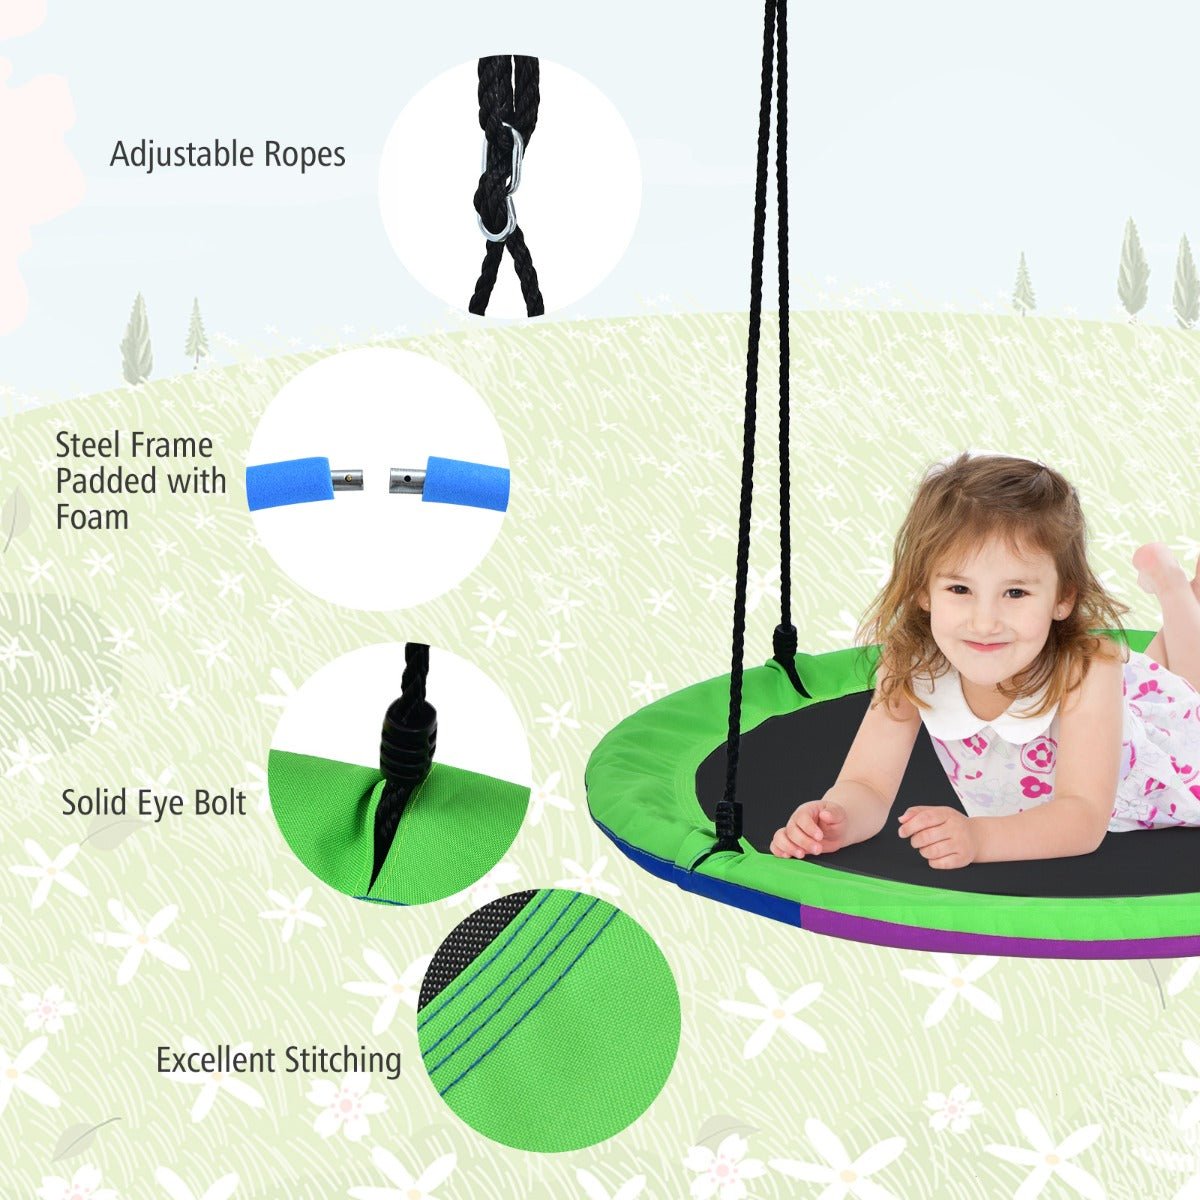 Green Saucer Swing for Kids: Foam-Padded Galvanized Tube for Backyard Fun